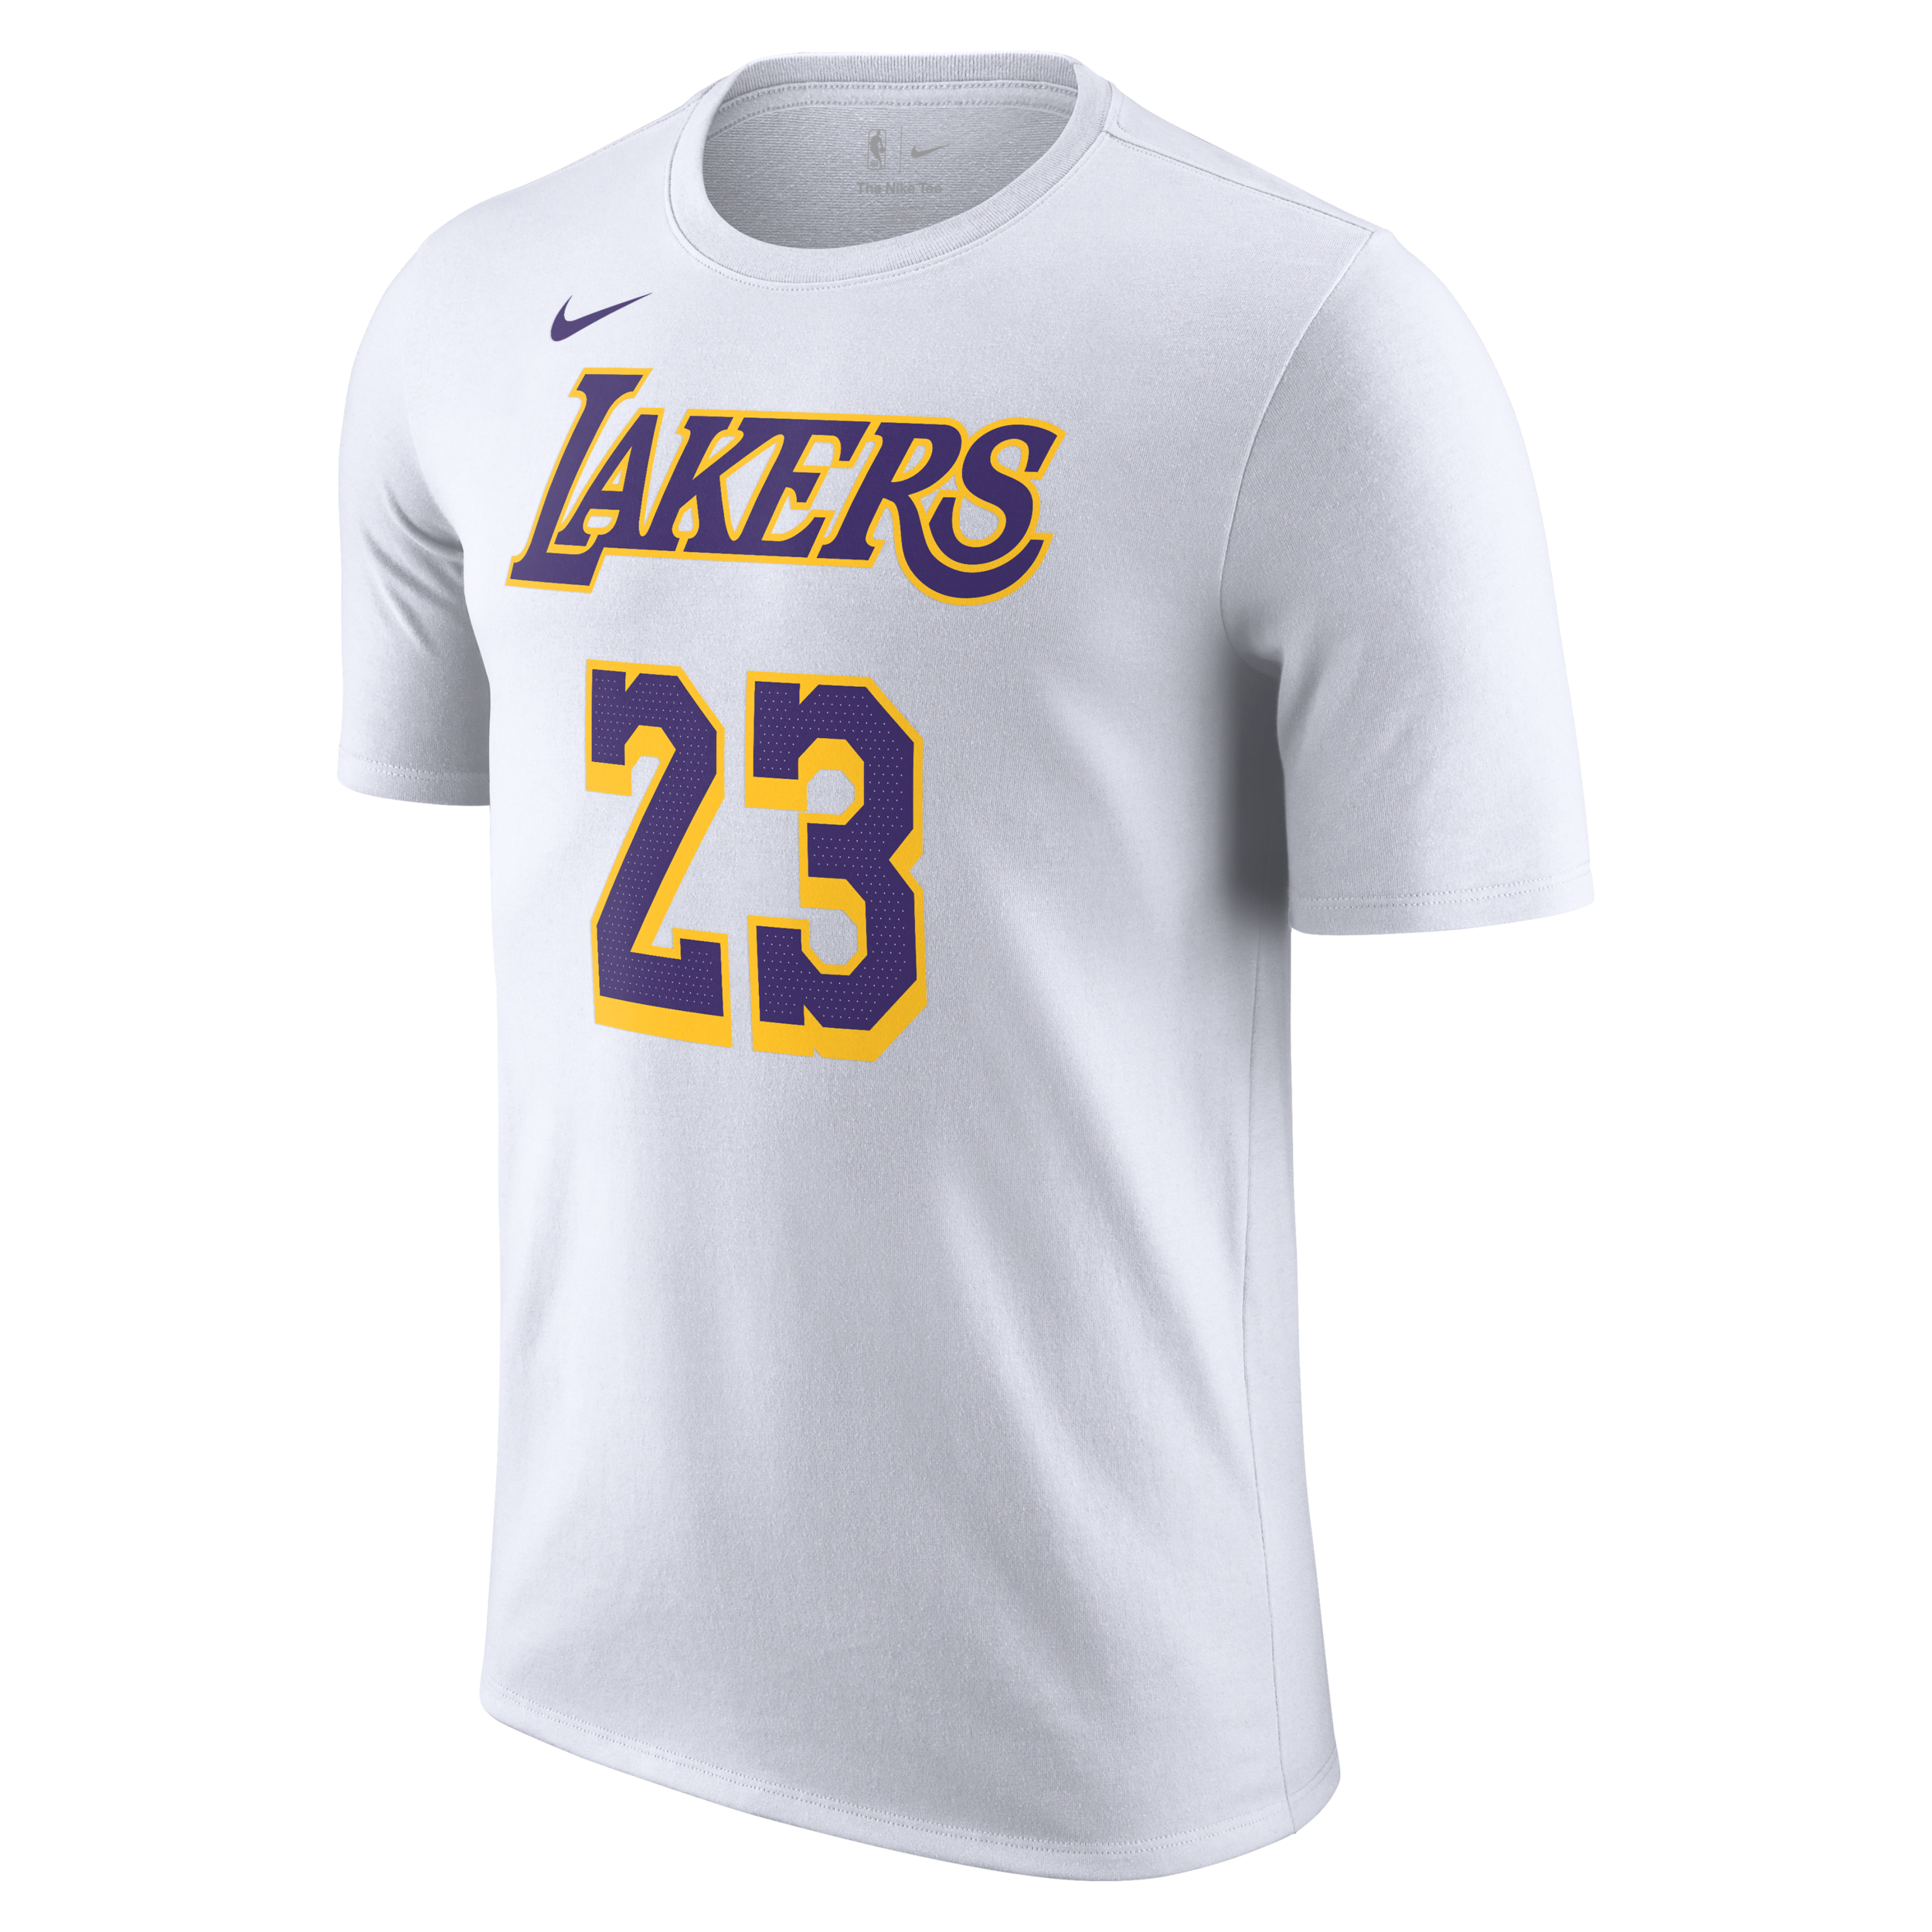 T-shirt Nike NBA Los Angeles Lakers - Uomo - Bianco